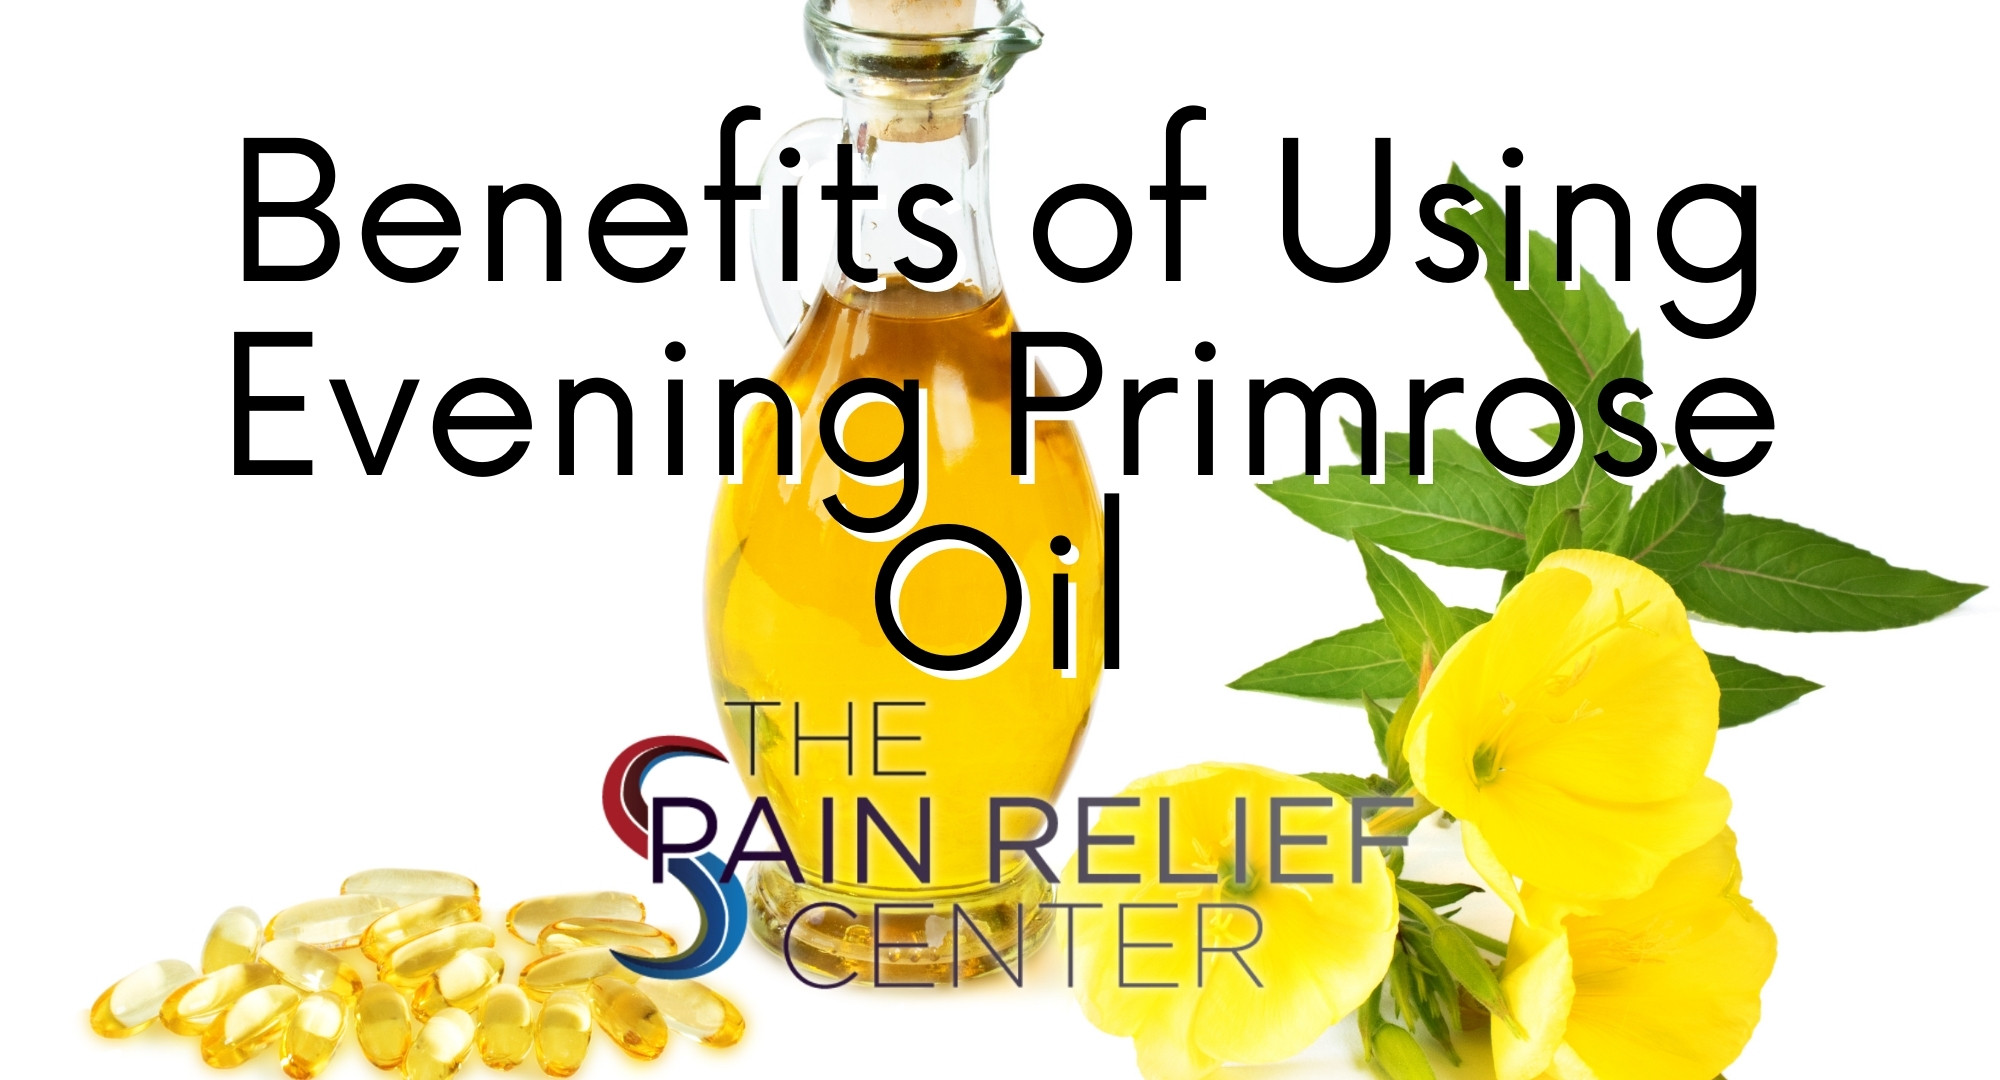 Benefits of Evening Primrose Oil